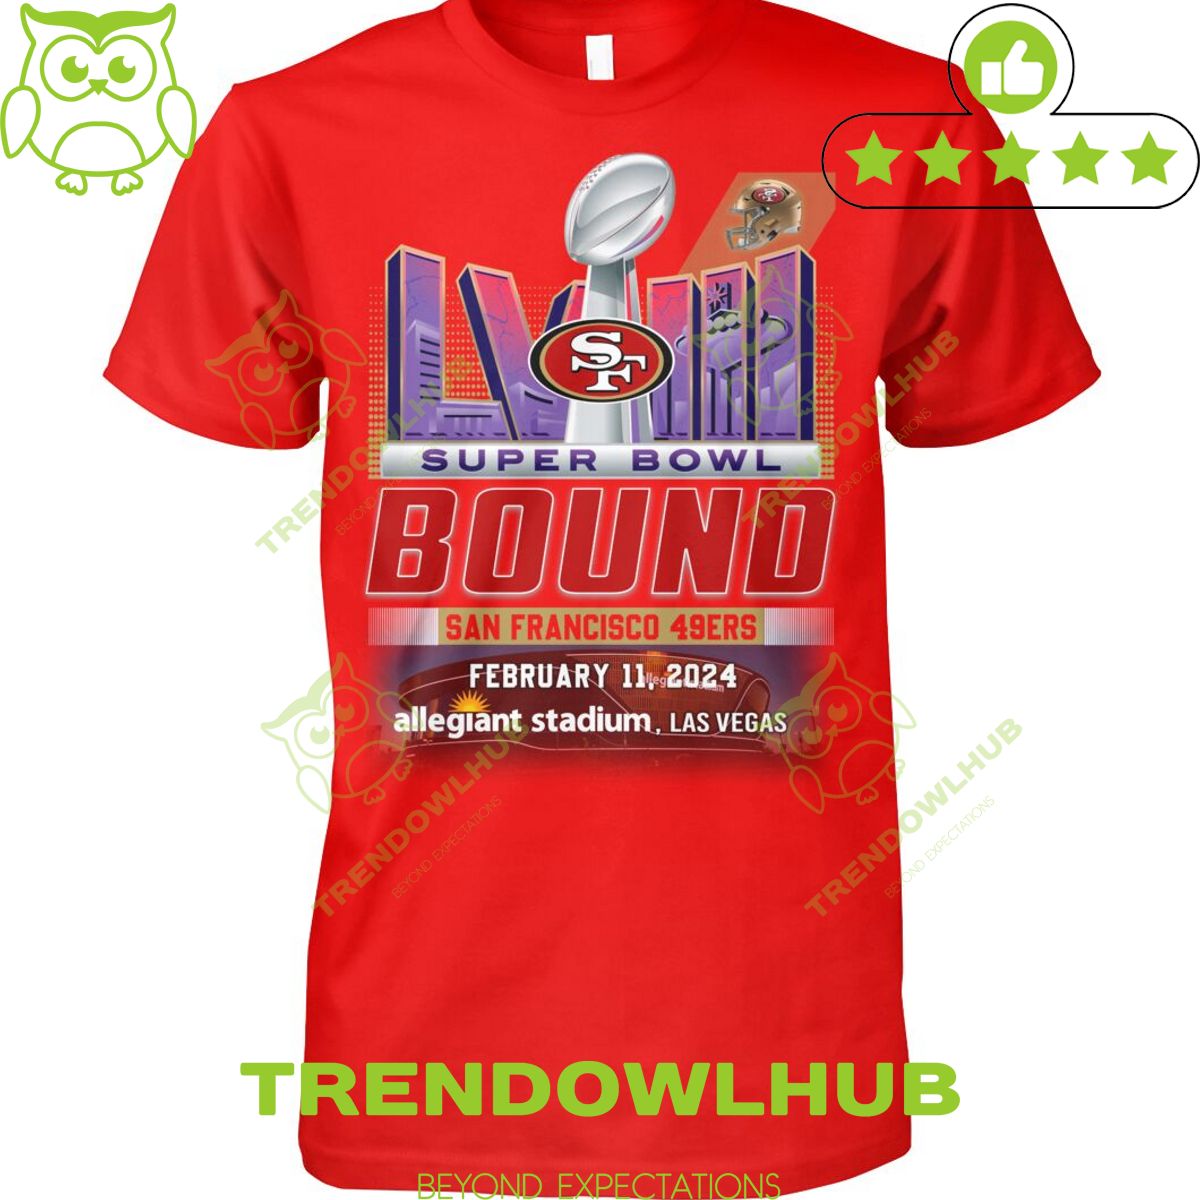 LVIII Super Bowl Bound San Francisco 49ers 11 Feb at Allegian stadium t shirt